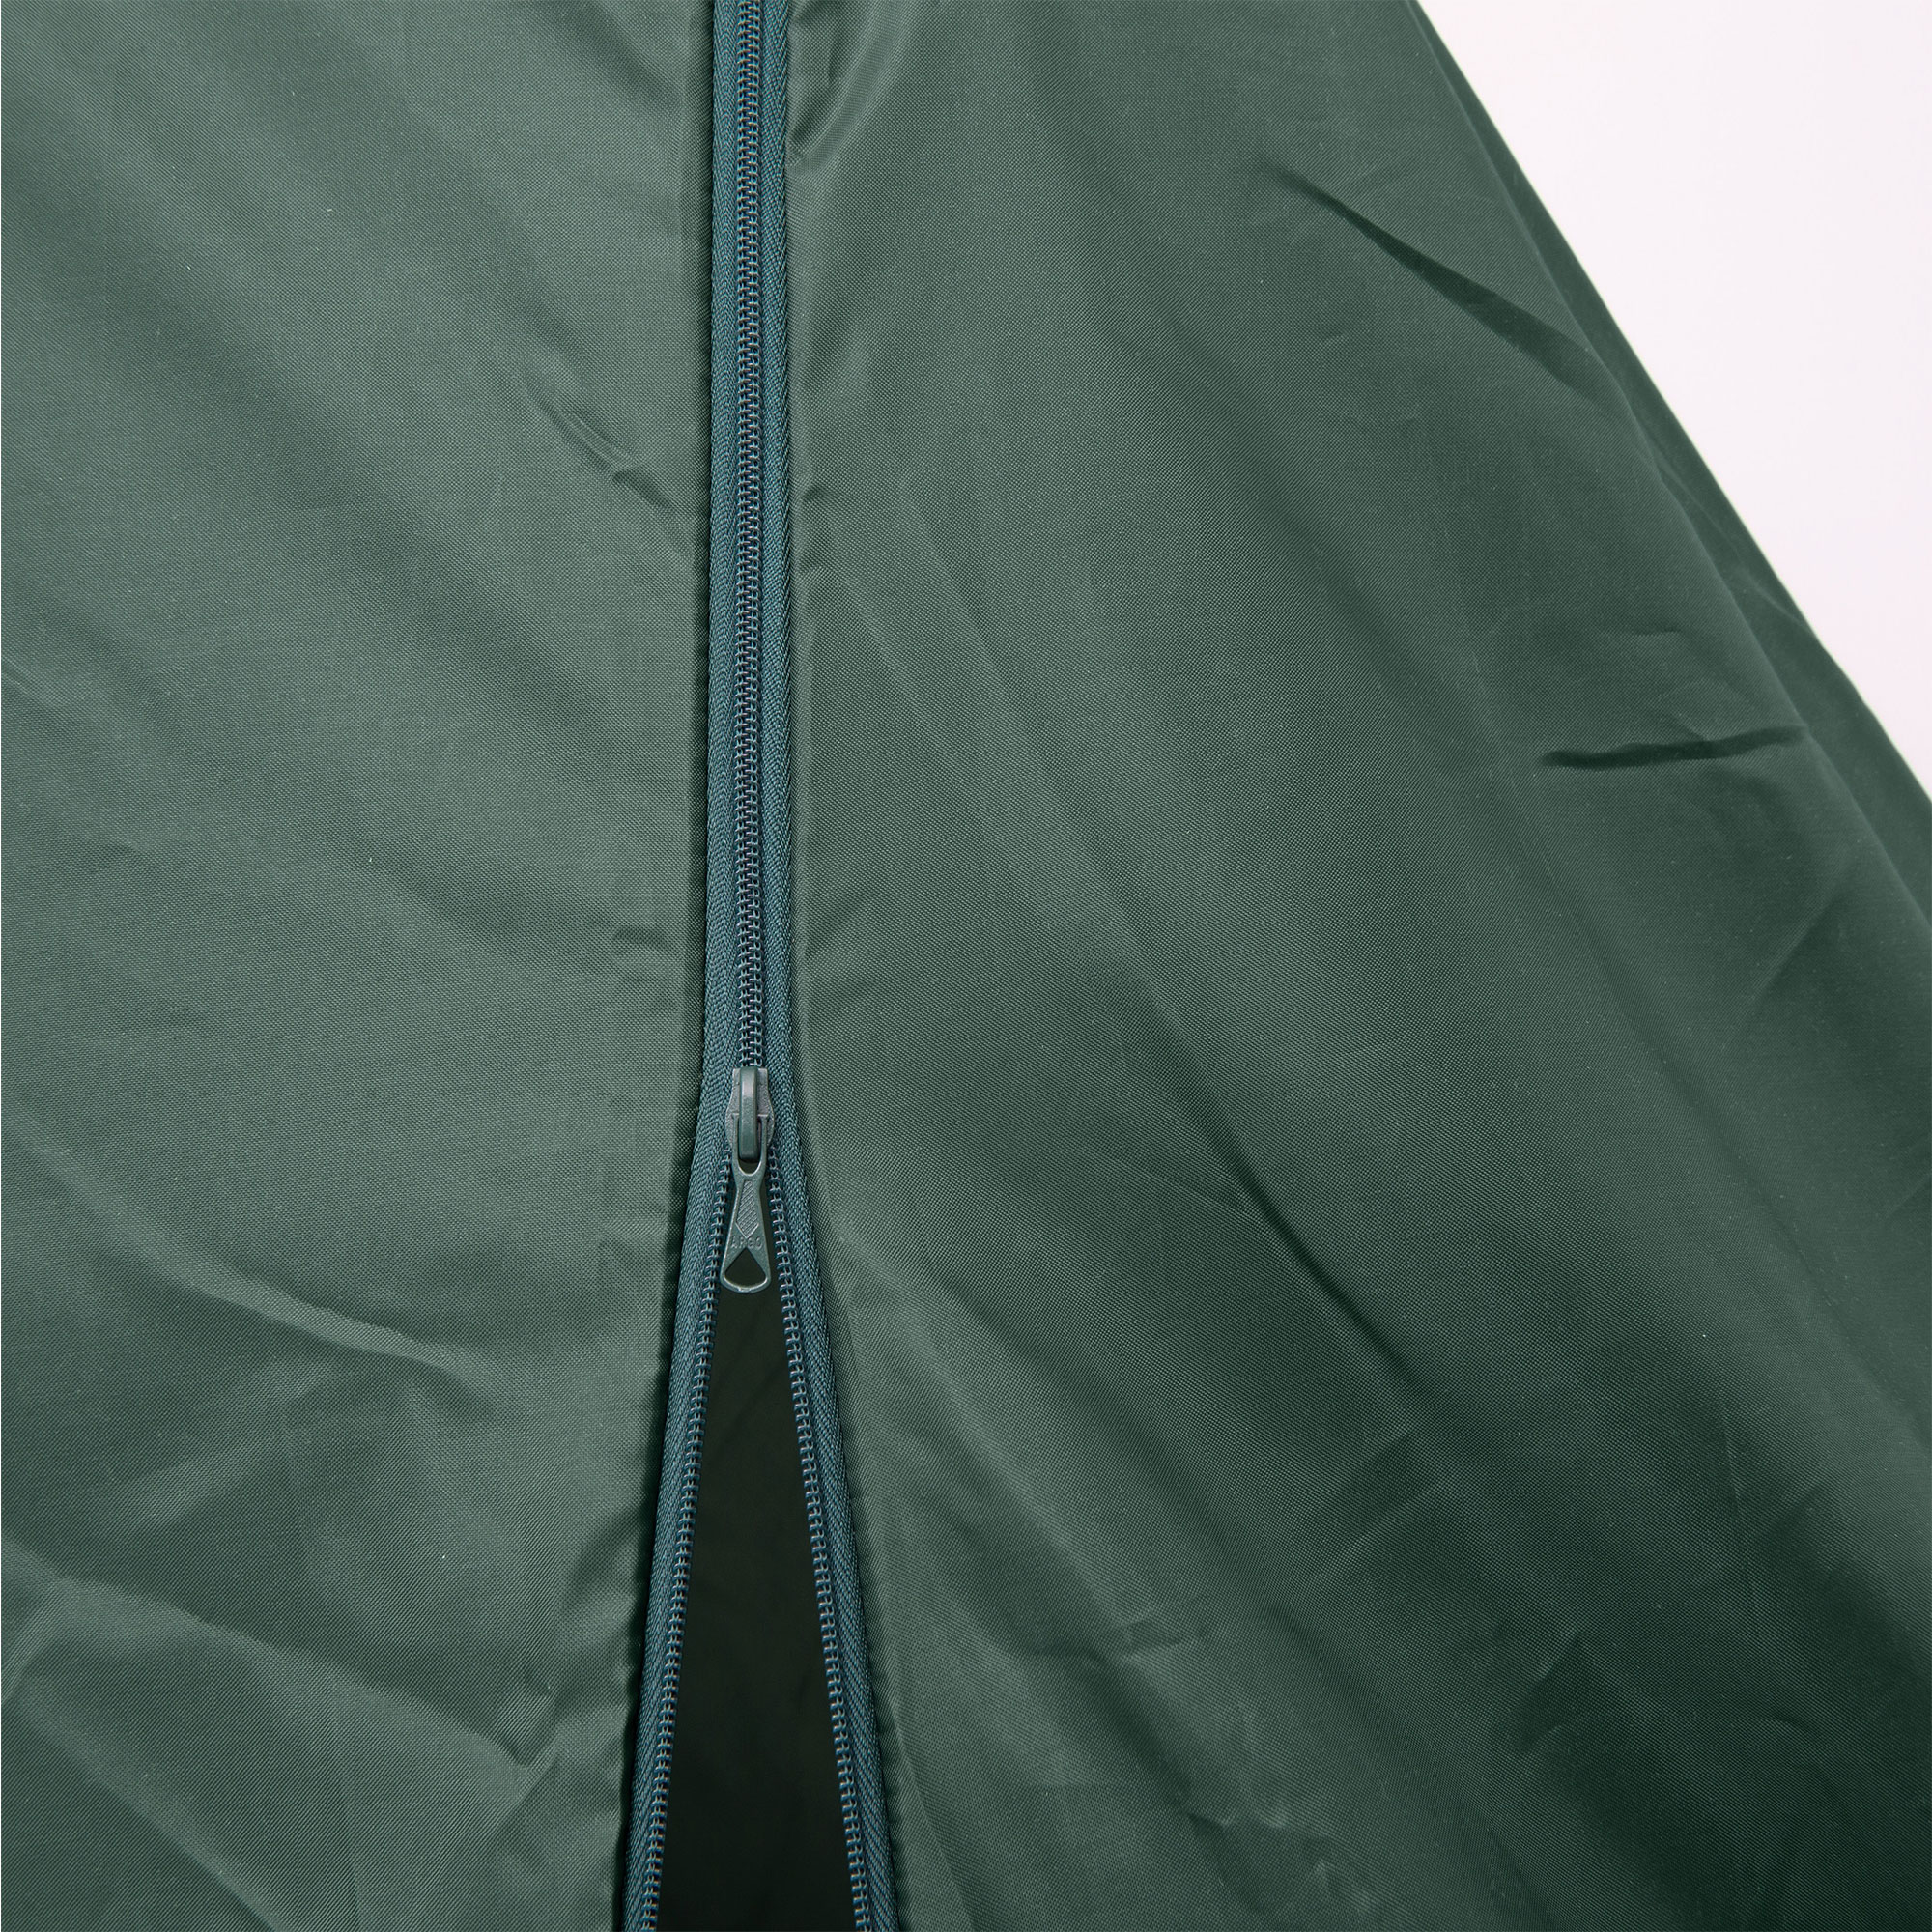 Amazonas Swing Lounger Cover Schutz AZ-2020415